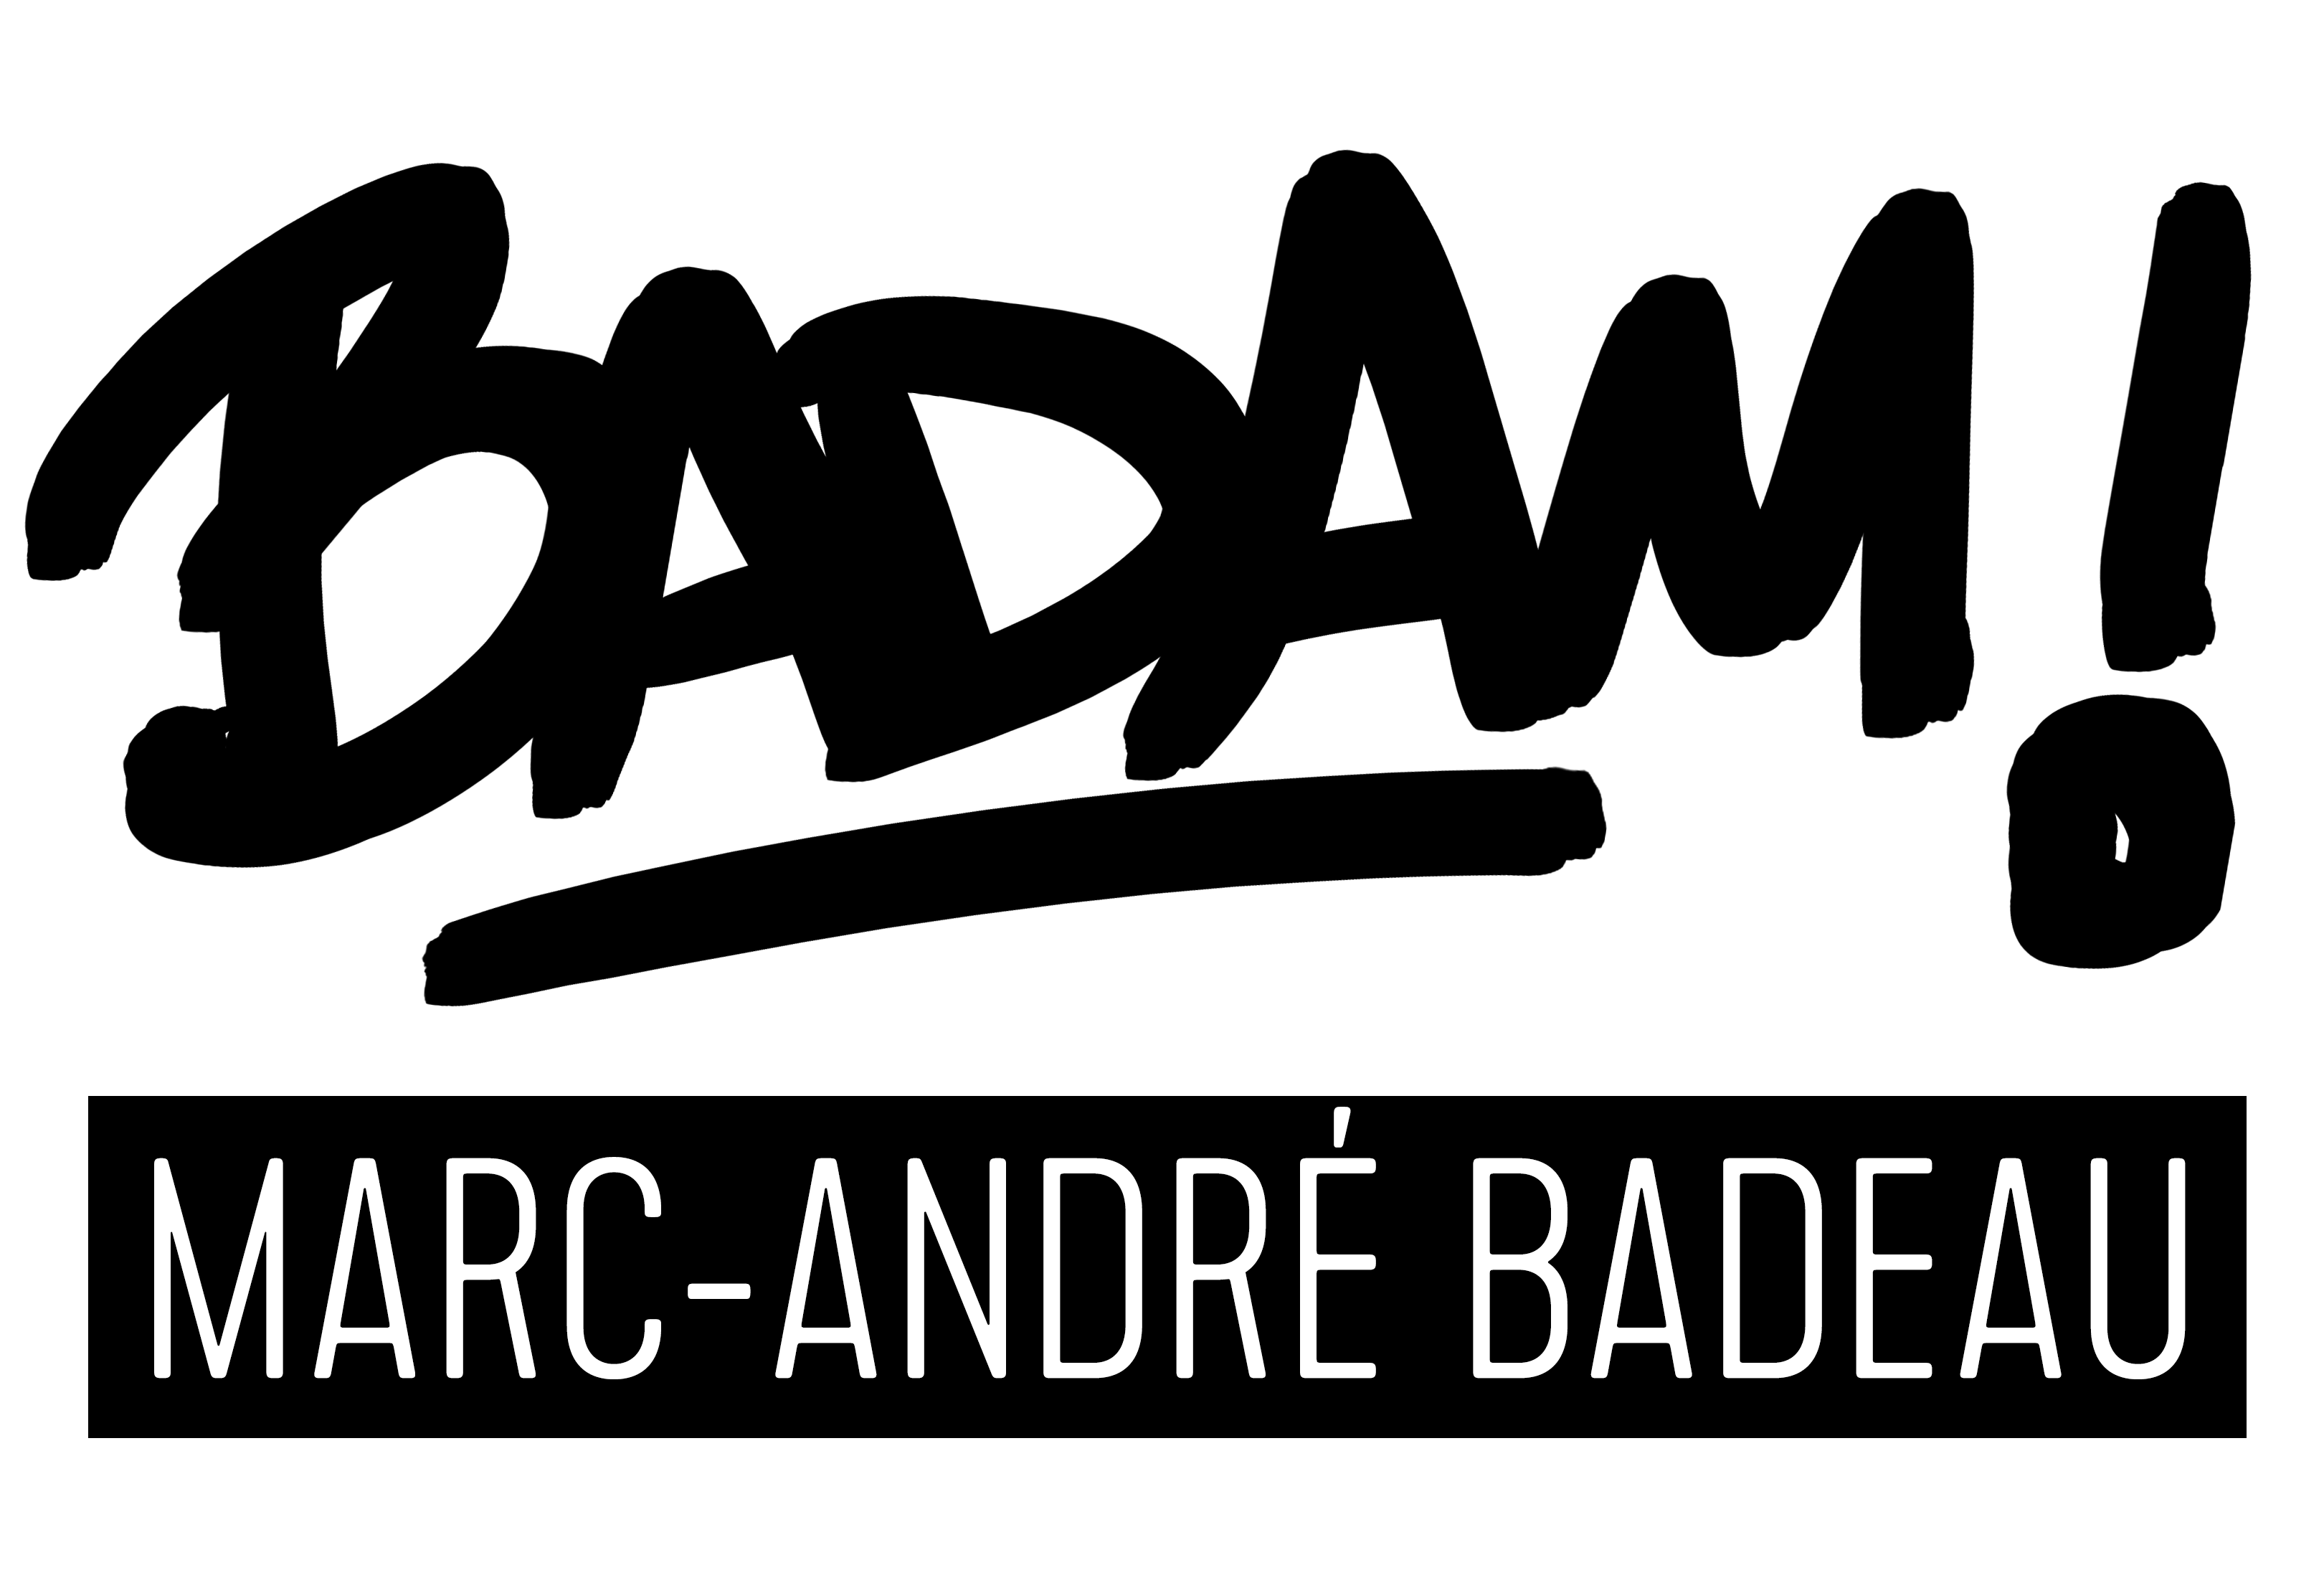 Marc-Andre Badeau